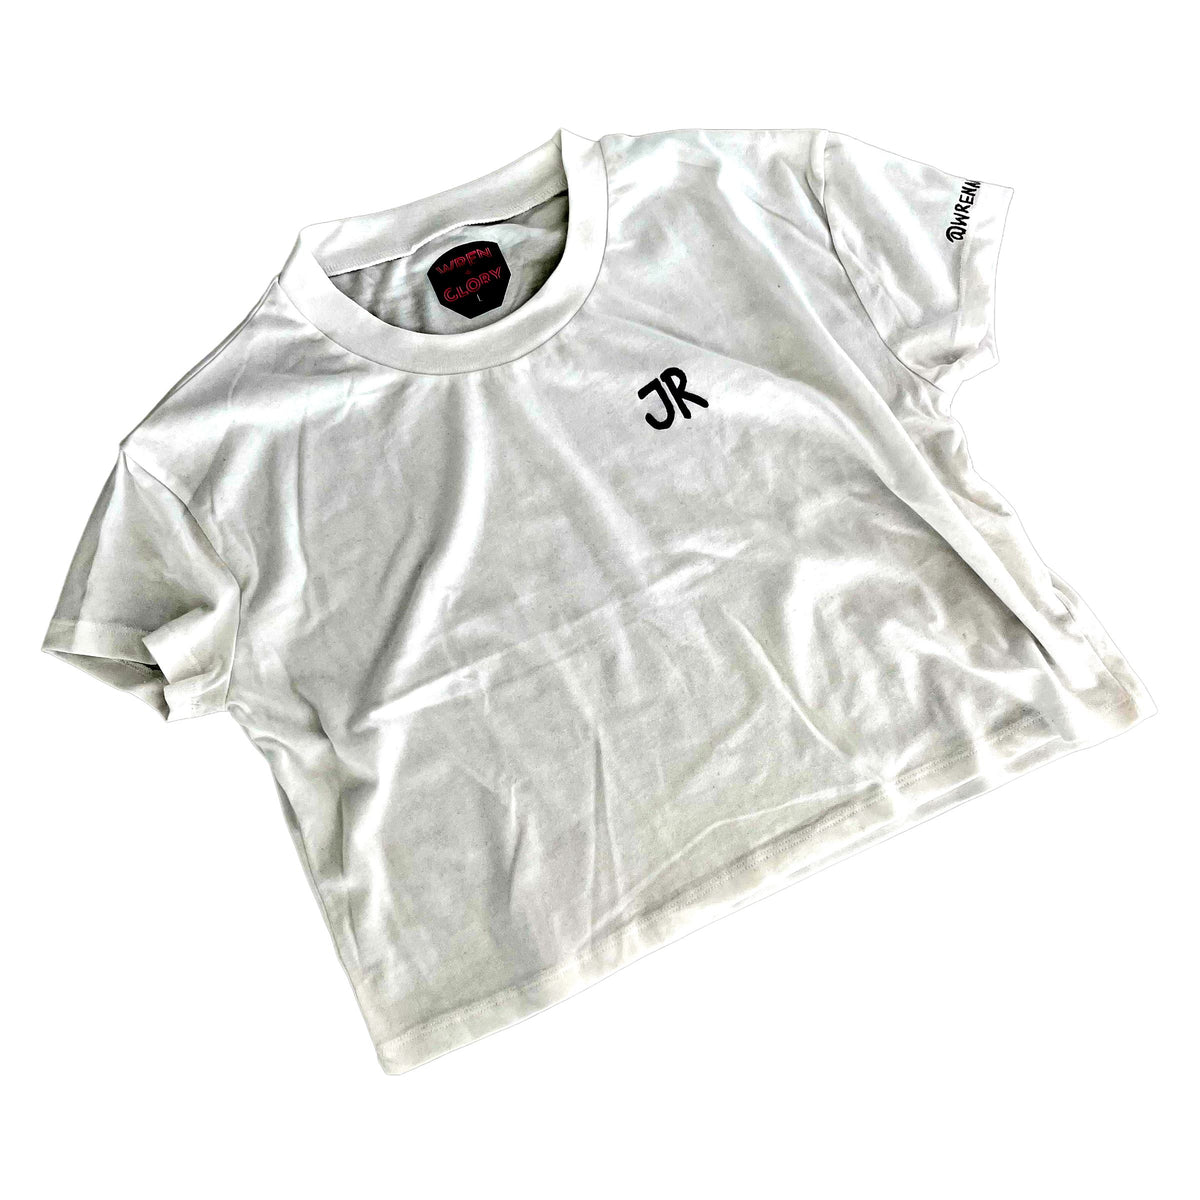 'Basic But Personalized' White T Shirt